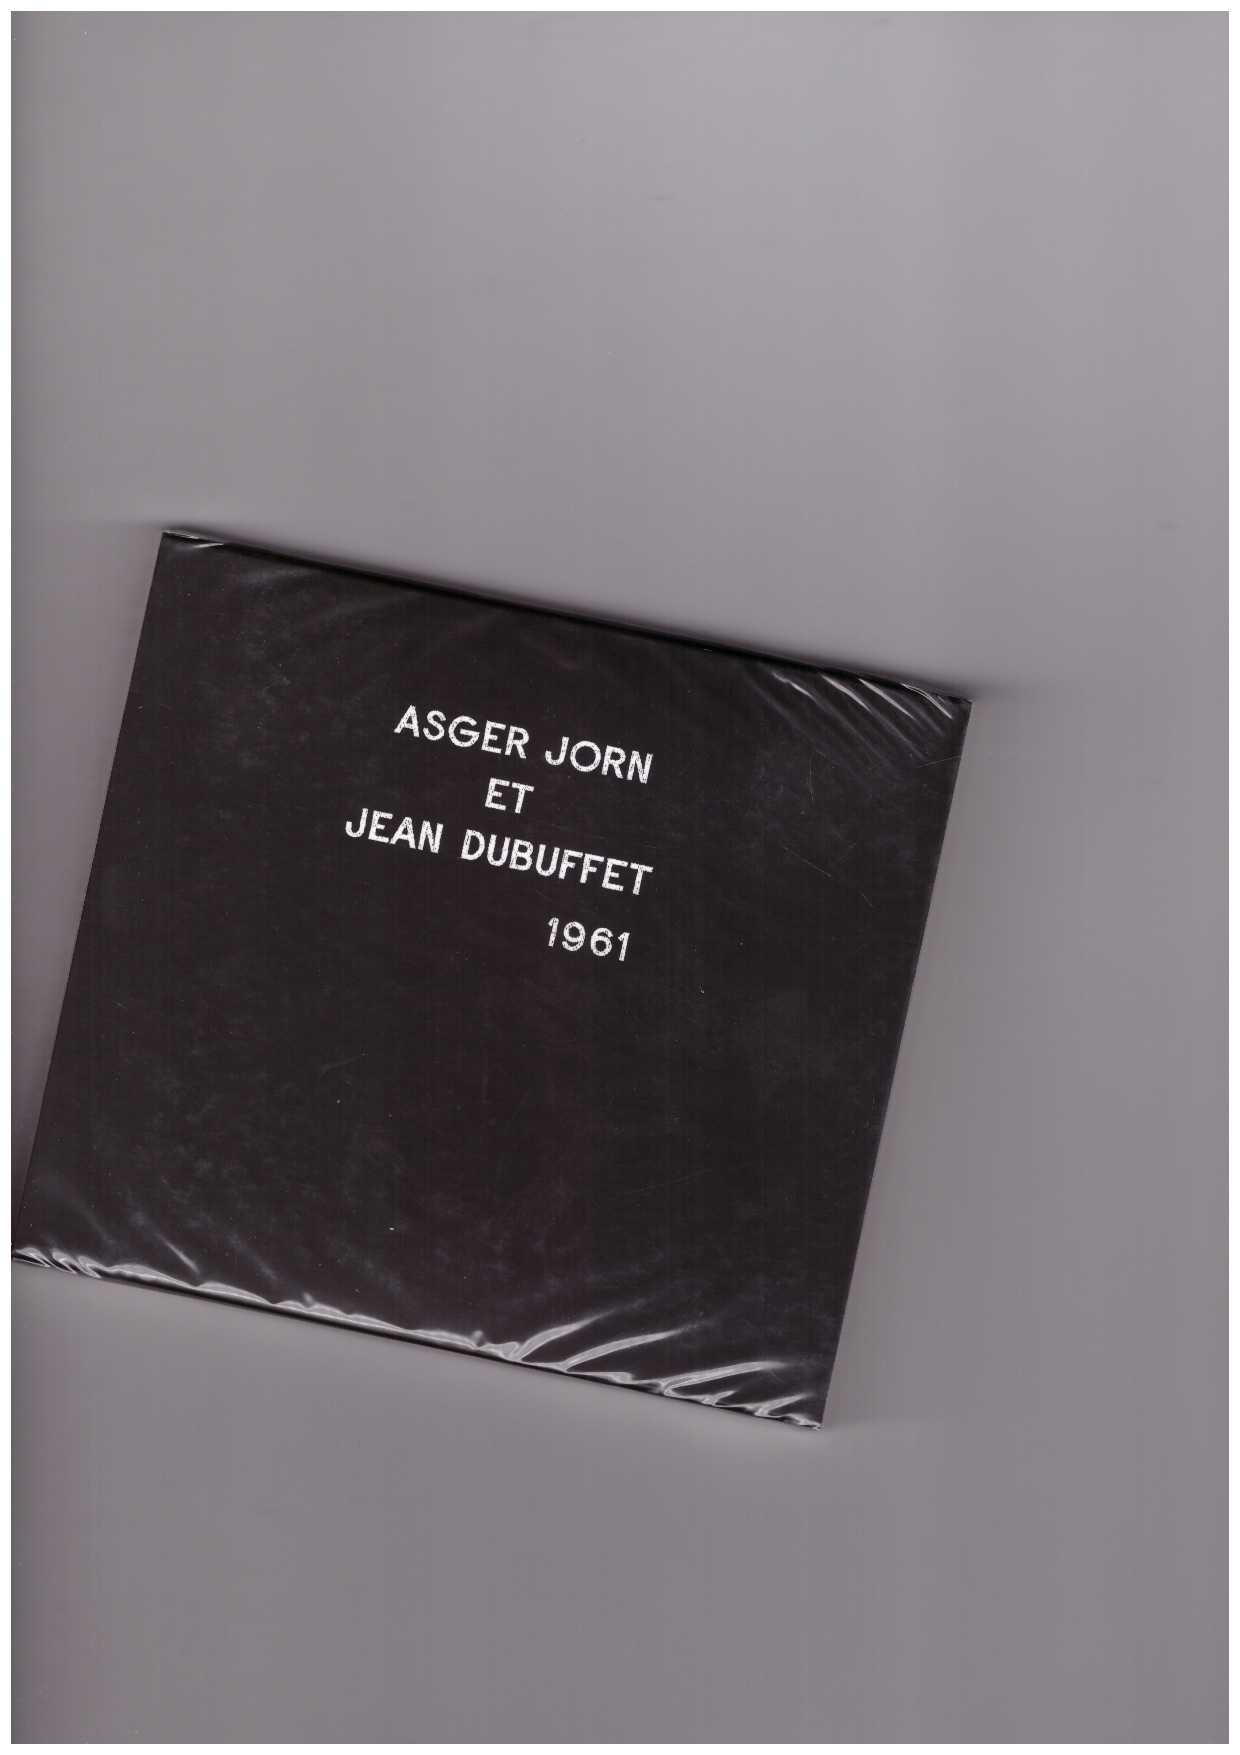 JORN, Asger ; DUBUFFET, Jean  - Musique Phénomenale (CD)